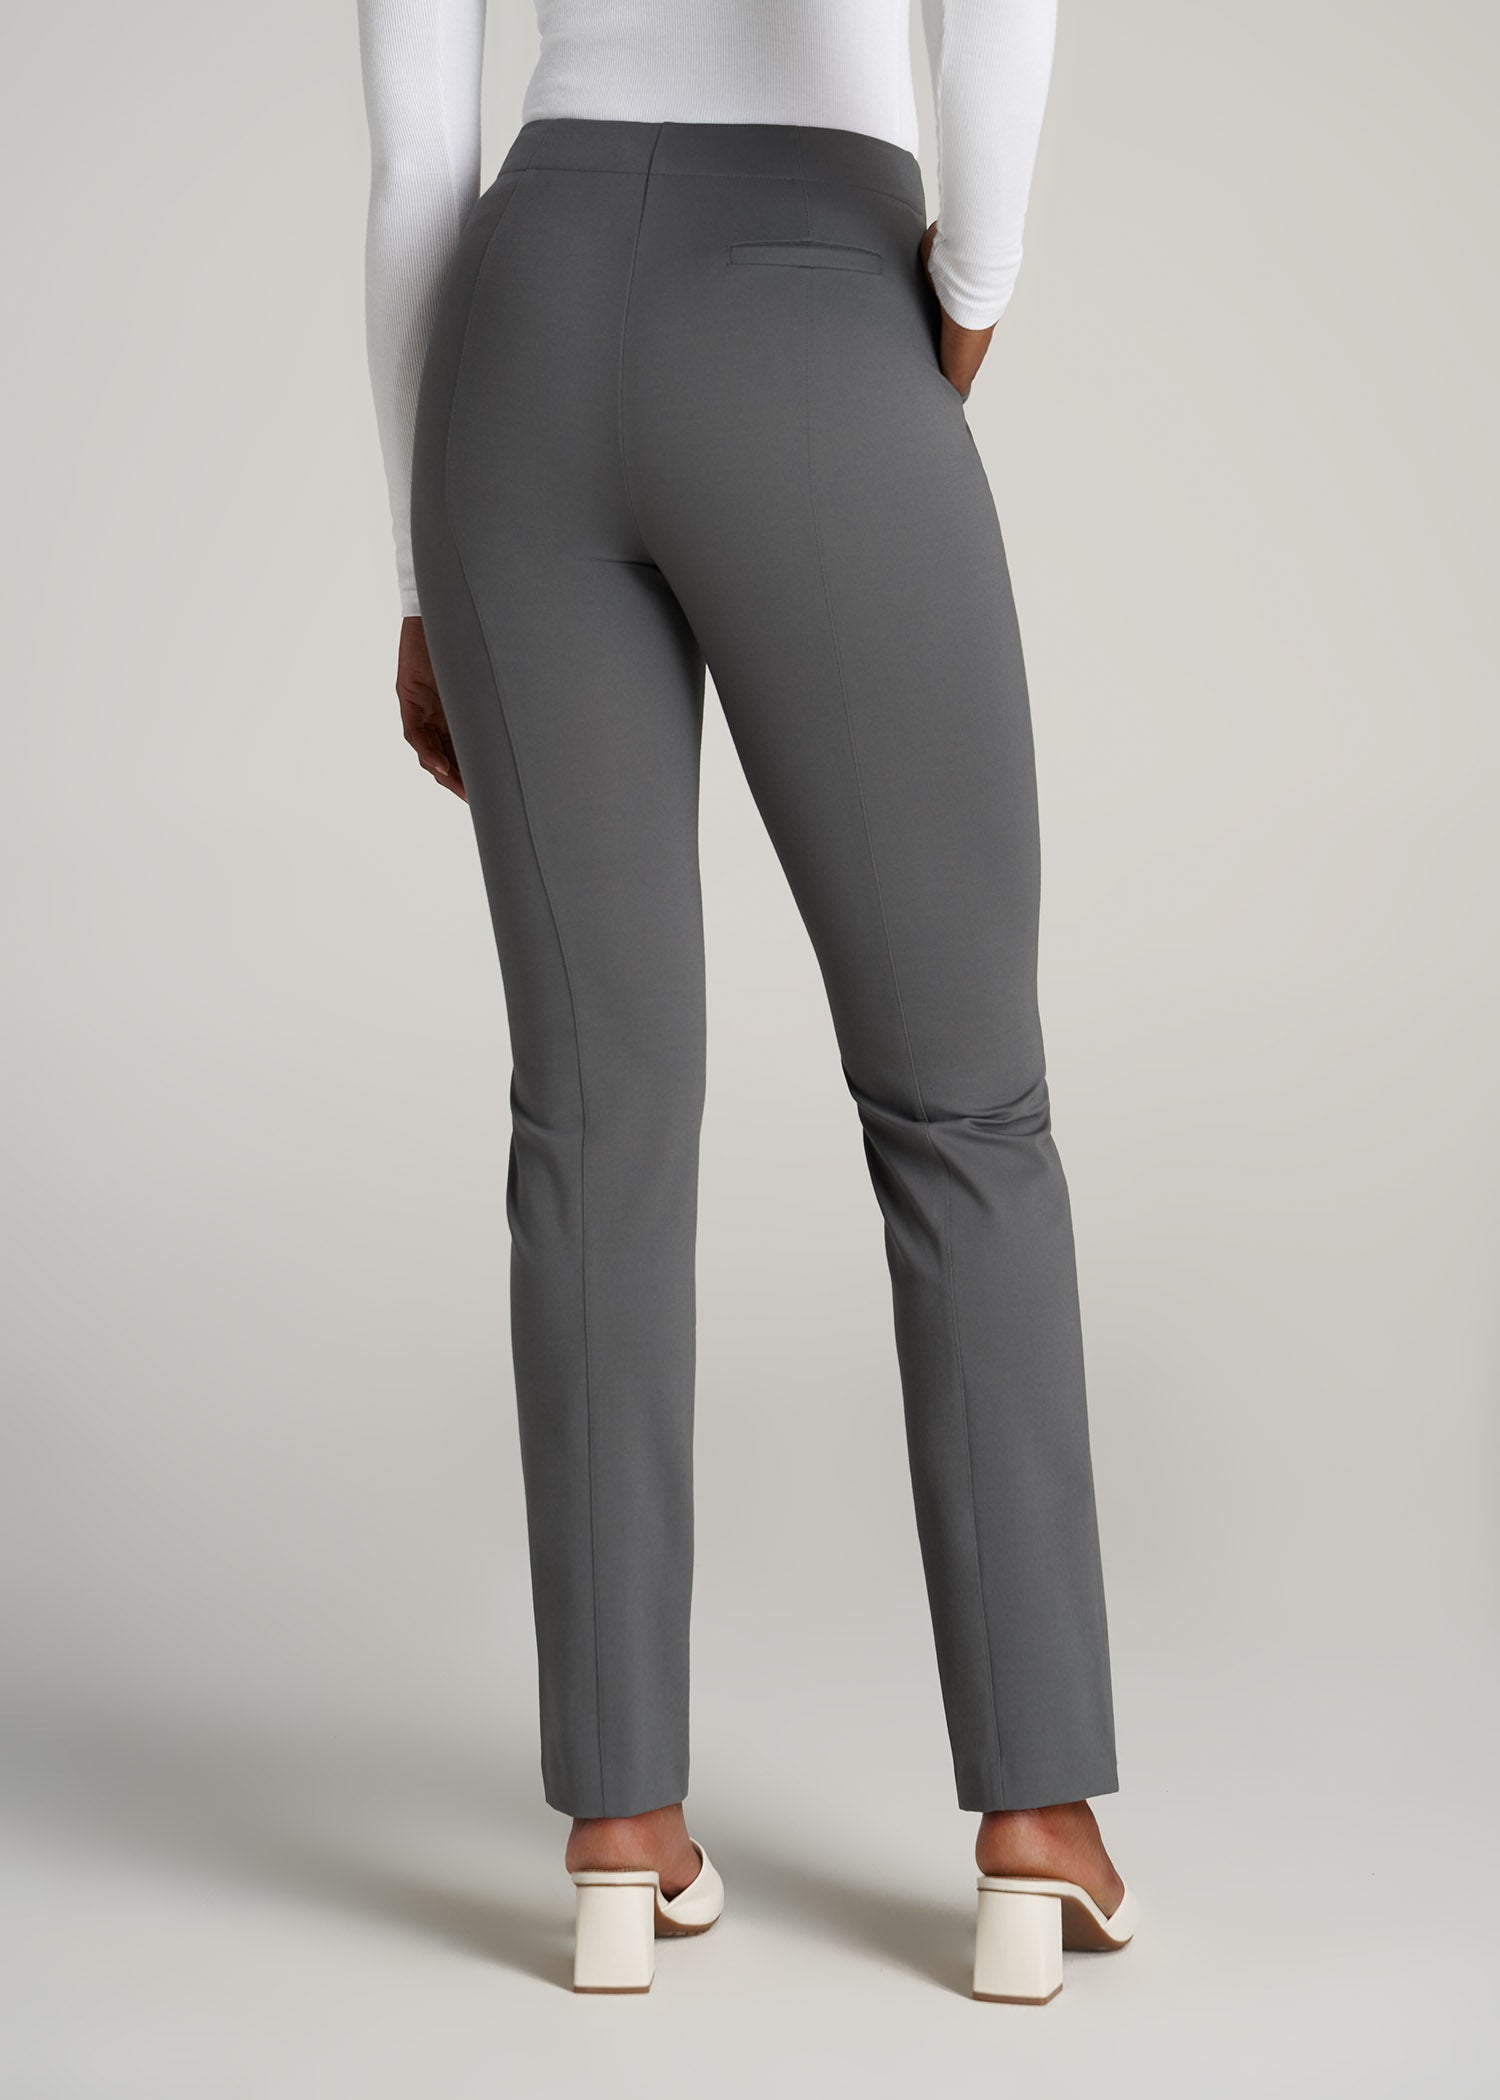 SlimFit Dress Pants for Tall Women  American Tall